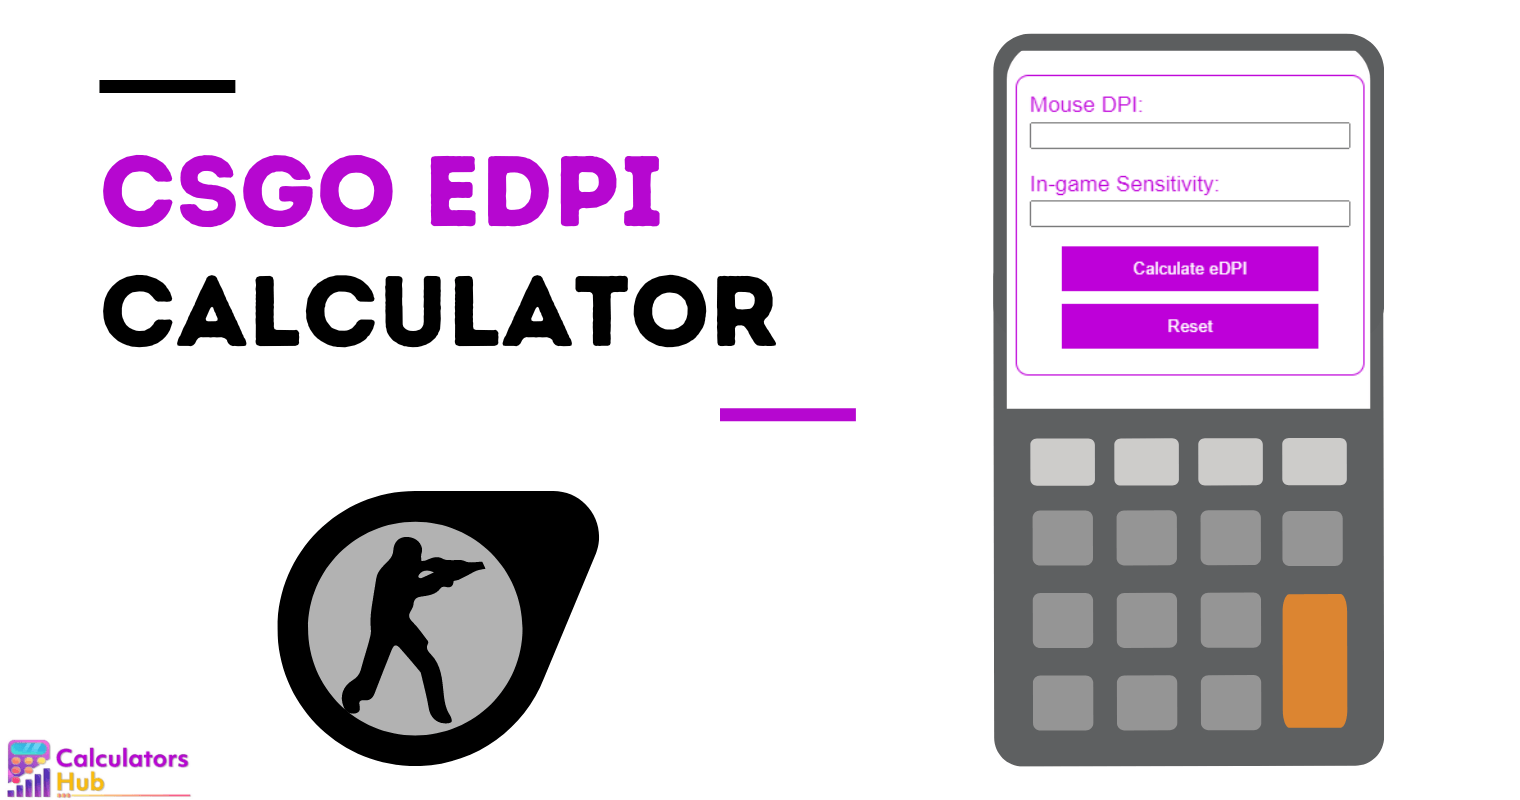 CSGO eDPI Calculator